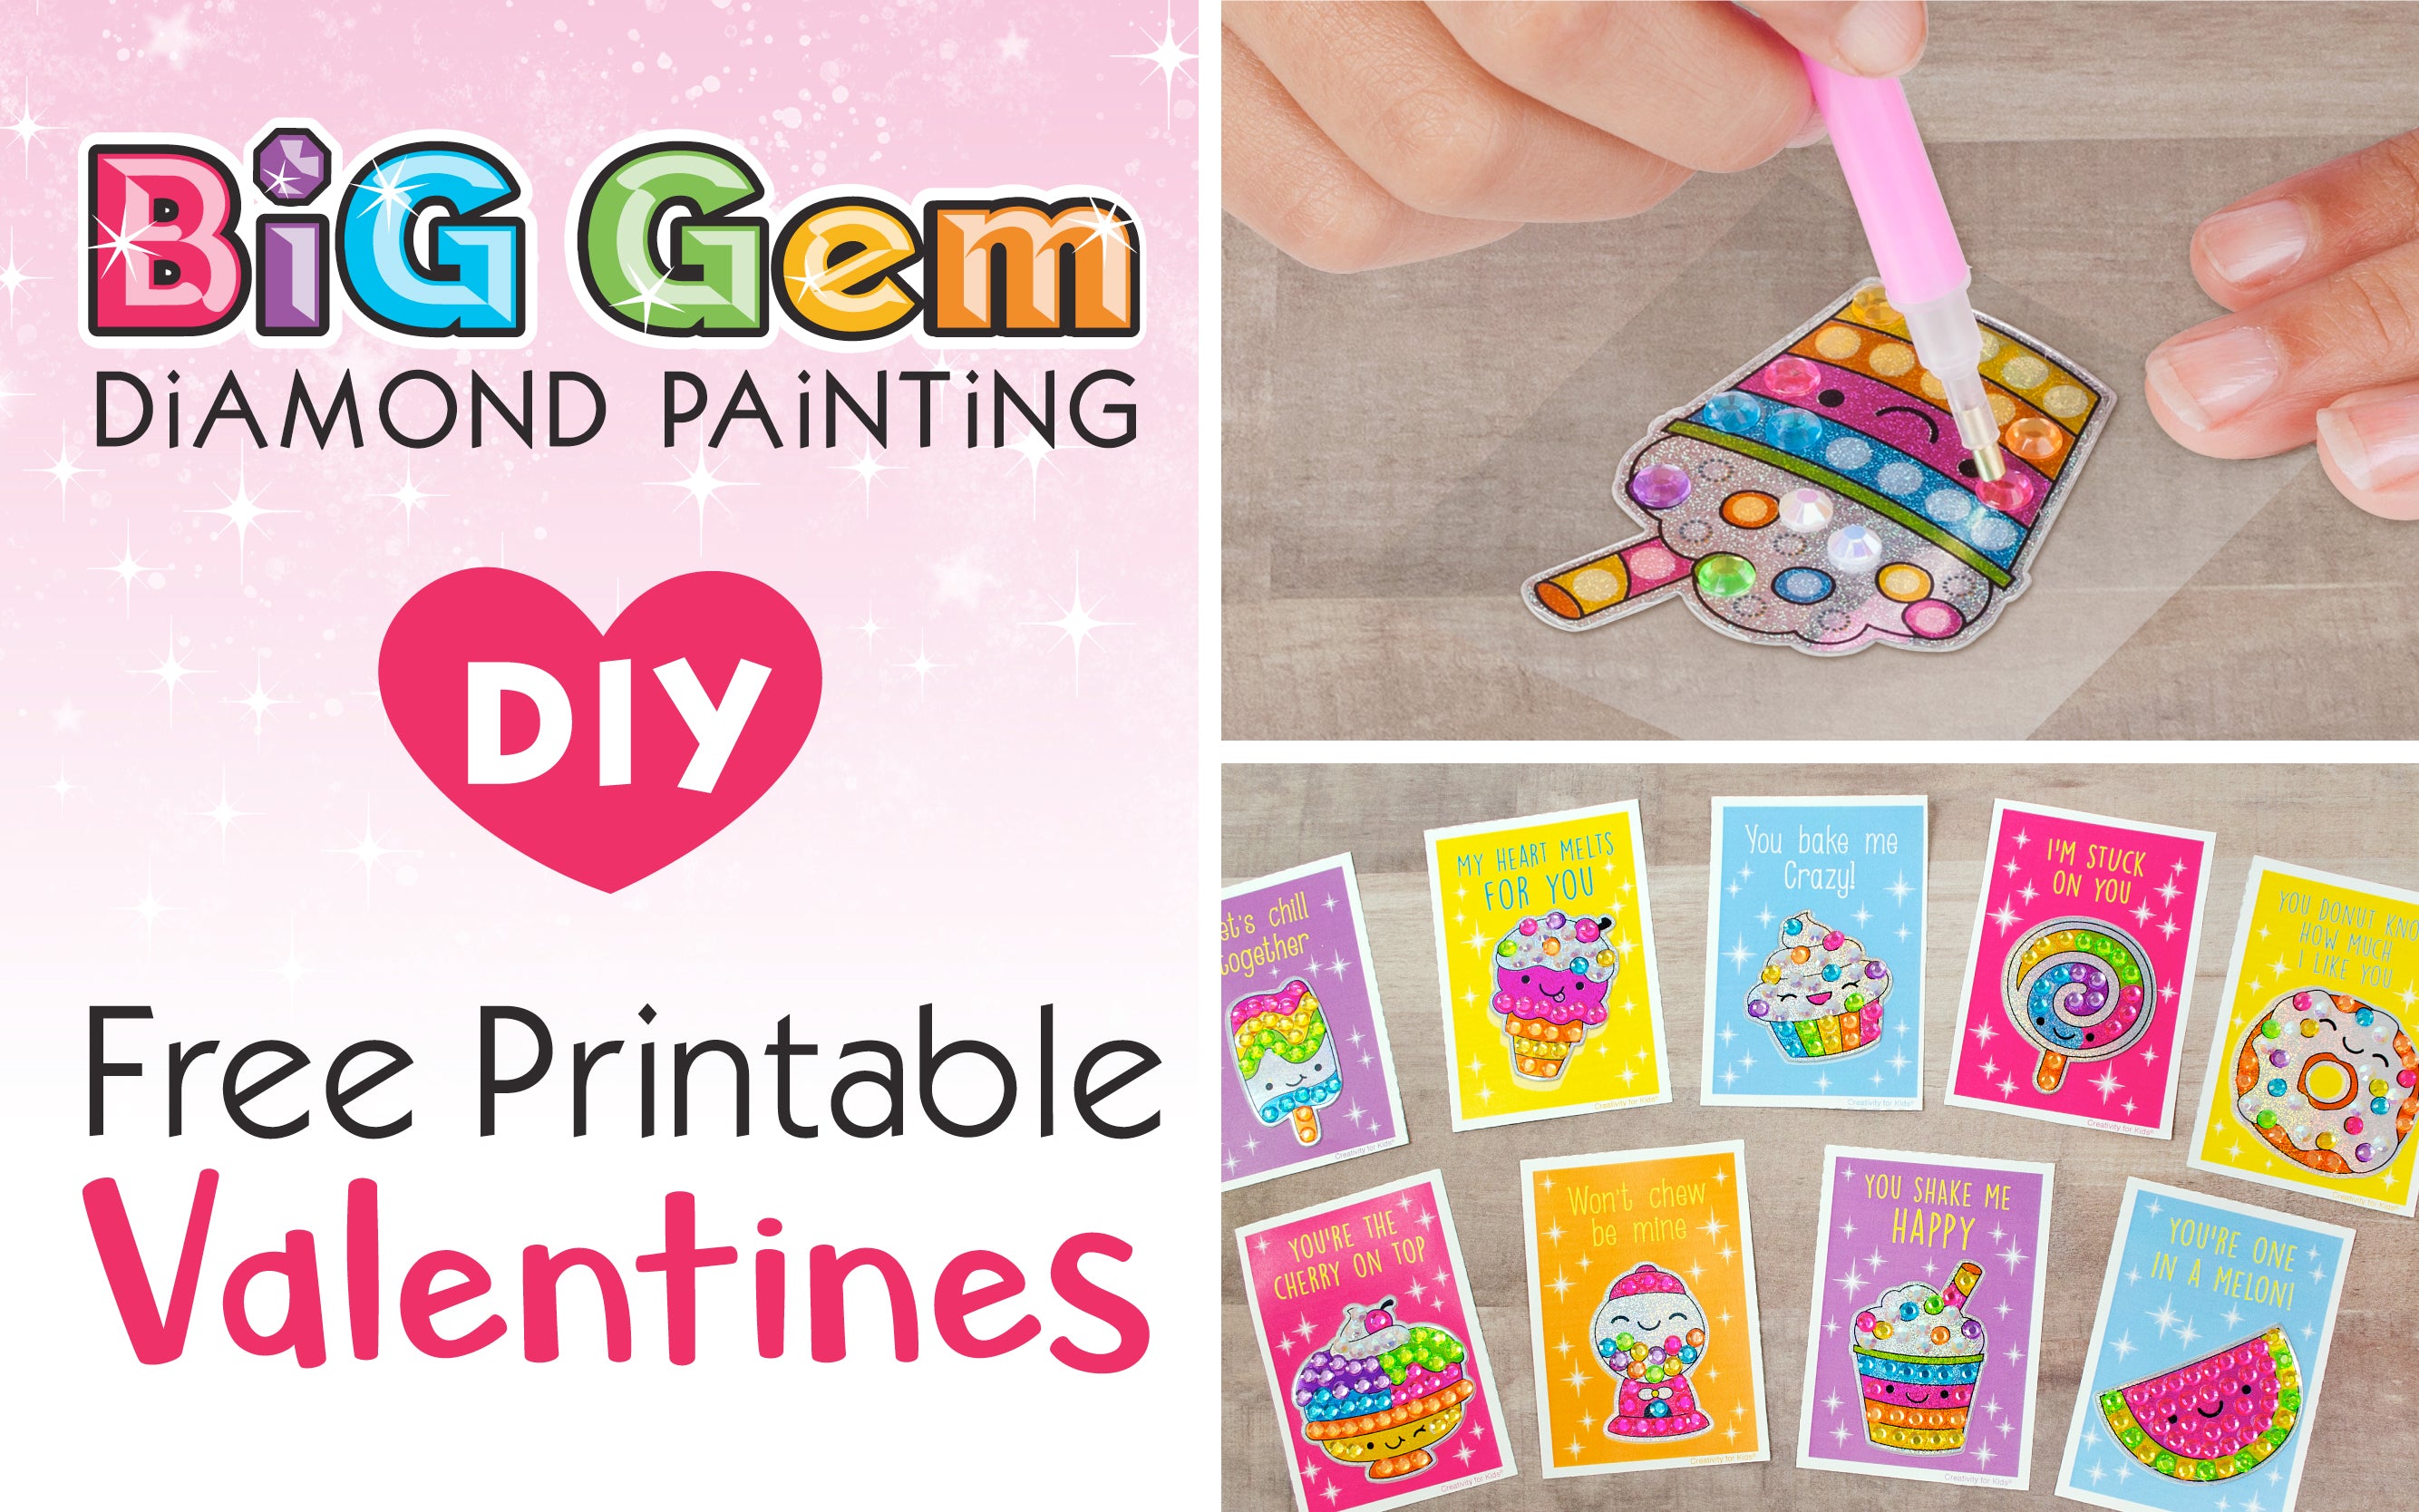 Printable  Perfect Match Valentine KIT - Pretty Little Studio